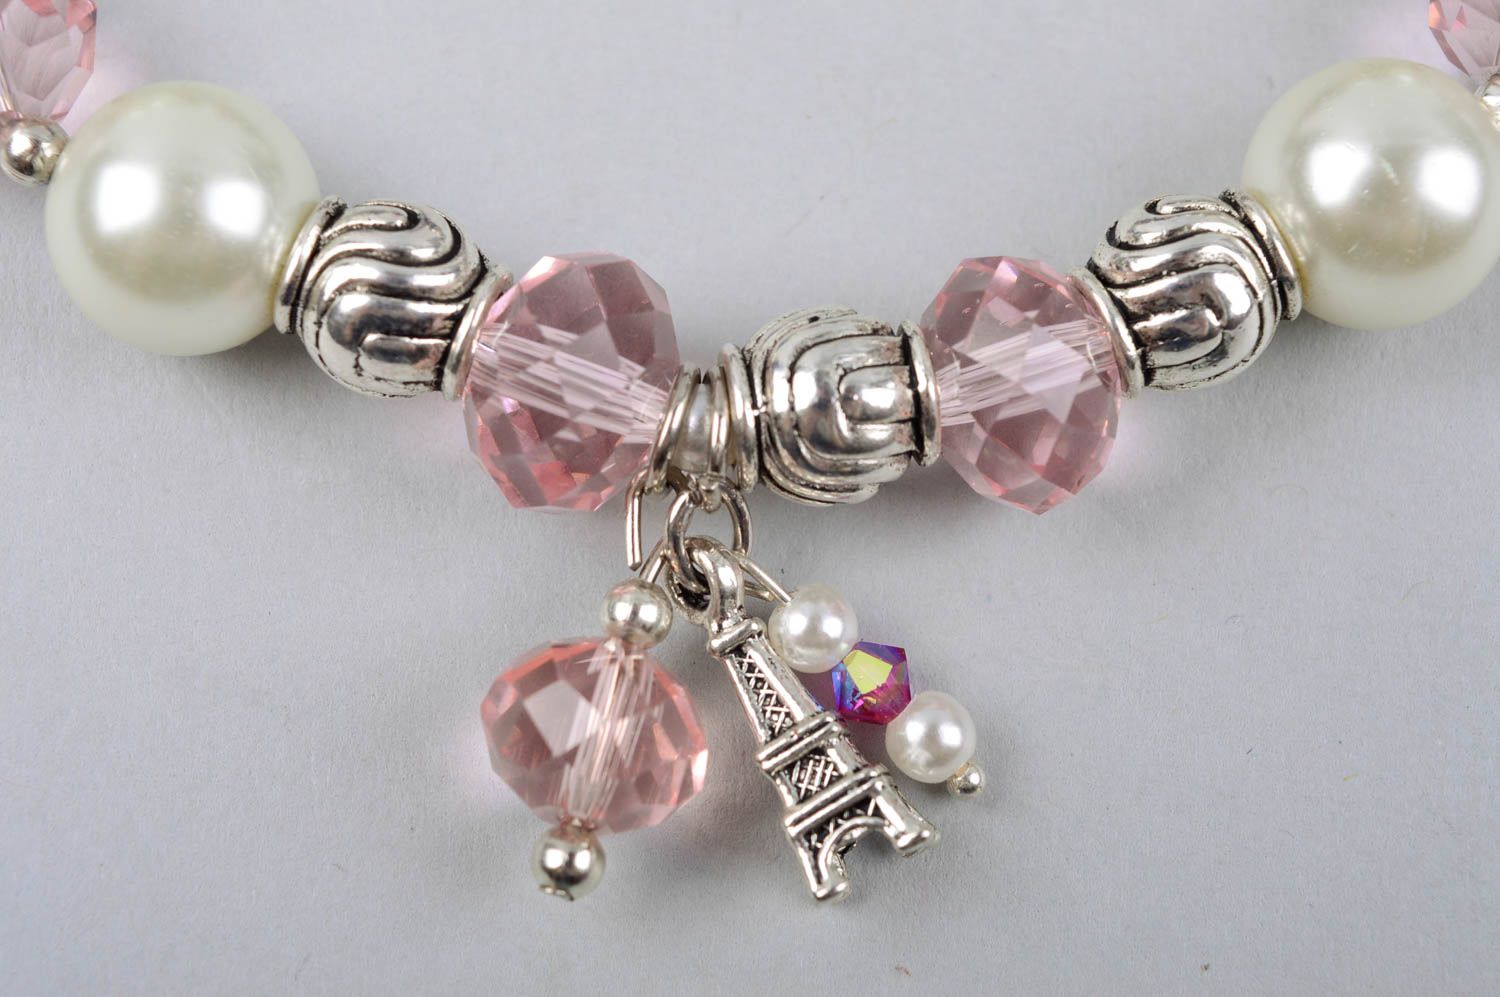 Beaded handmade wrist bracelet agate and crystals beautiful designer accessory photo 5